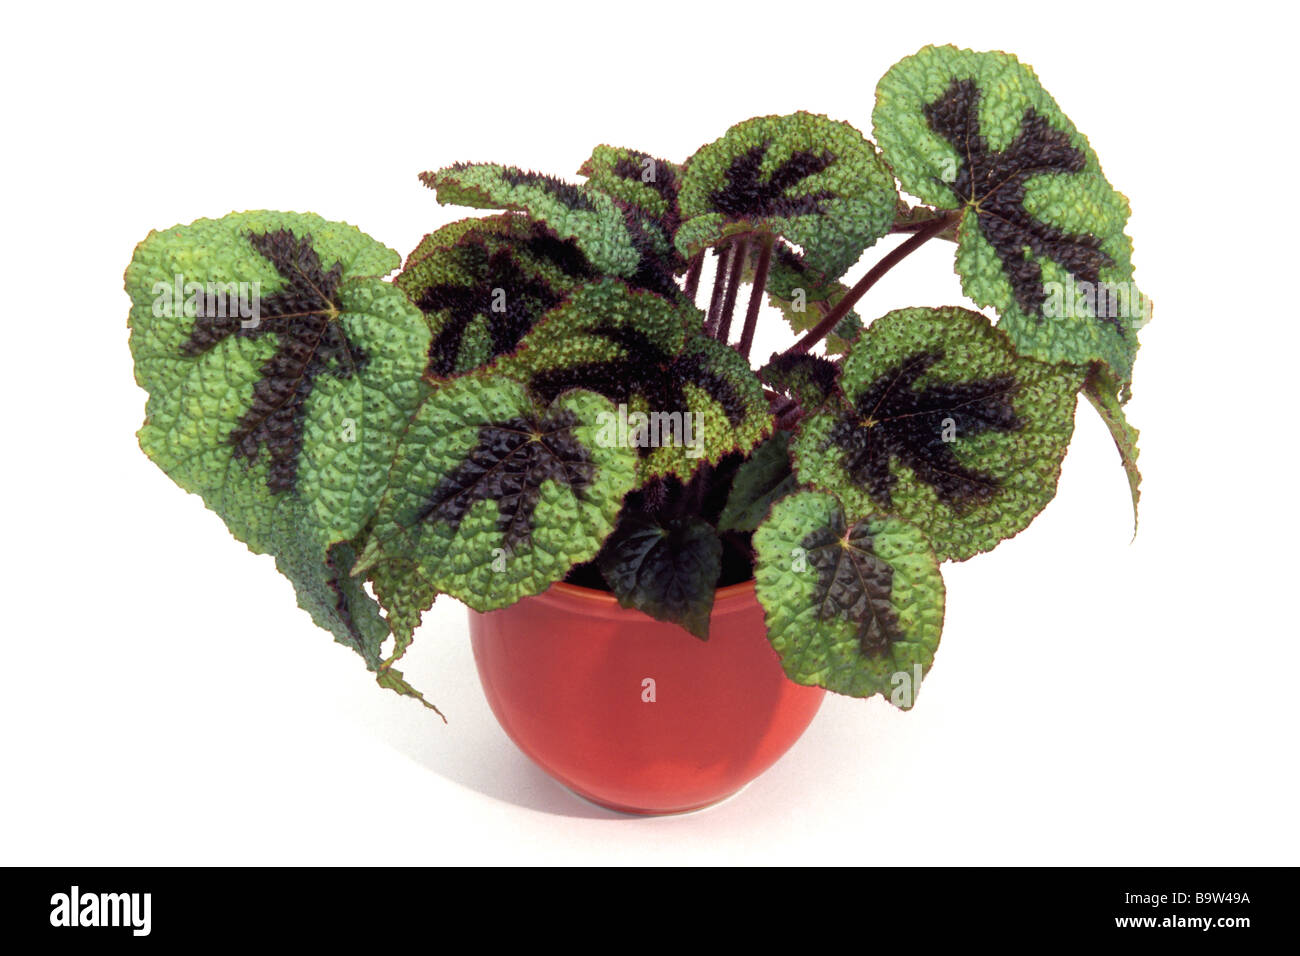 Begonia de hoja pintada fotografías e imágenes de alta resolución - Alamy